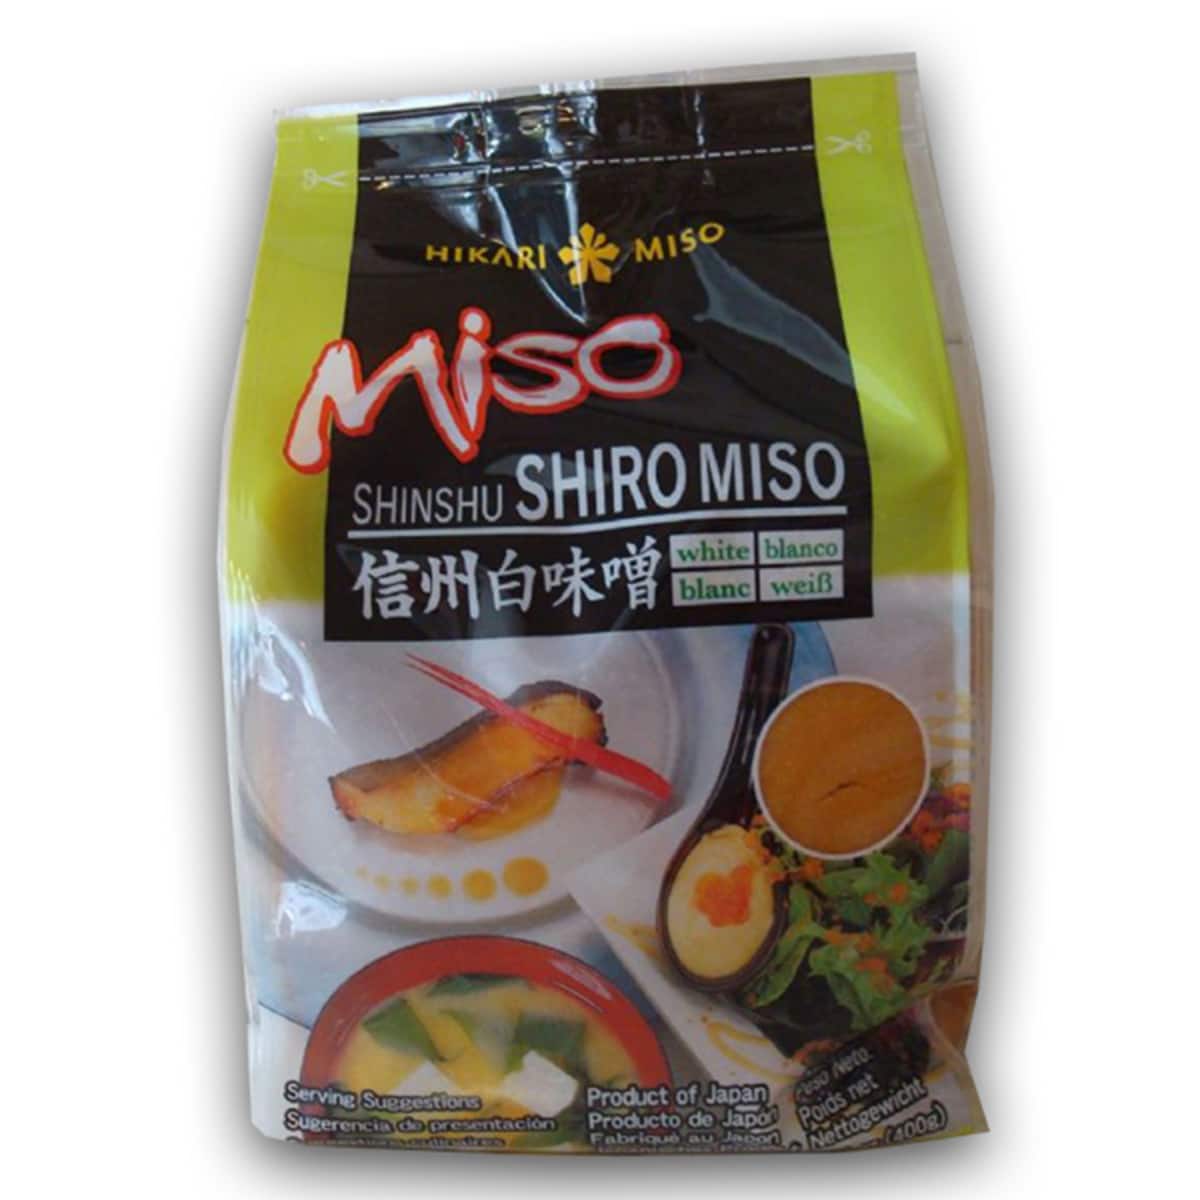 Buy Hikari White Soya Beans Japanese Miso Paste (Shinshu Shiro Miso) - 400 gm